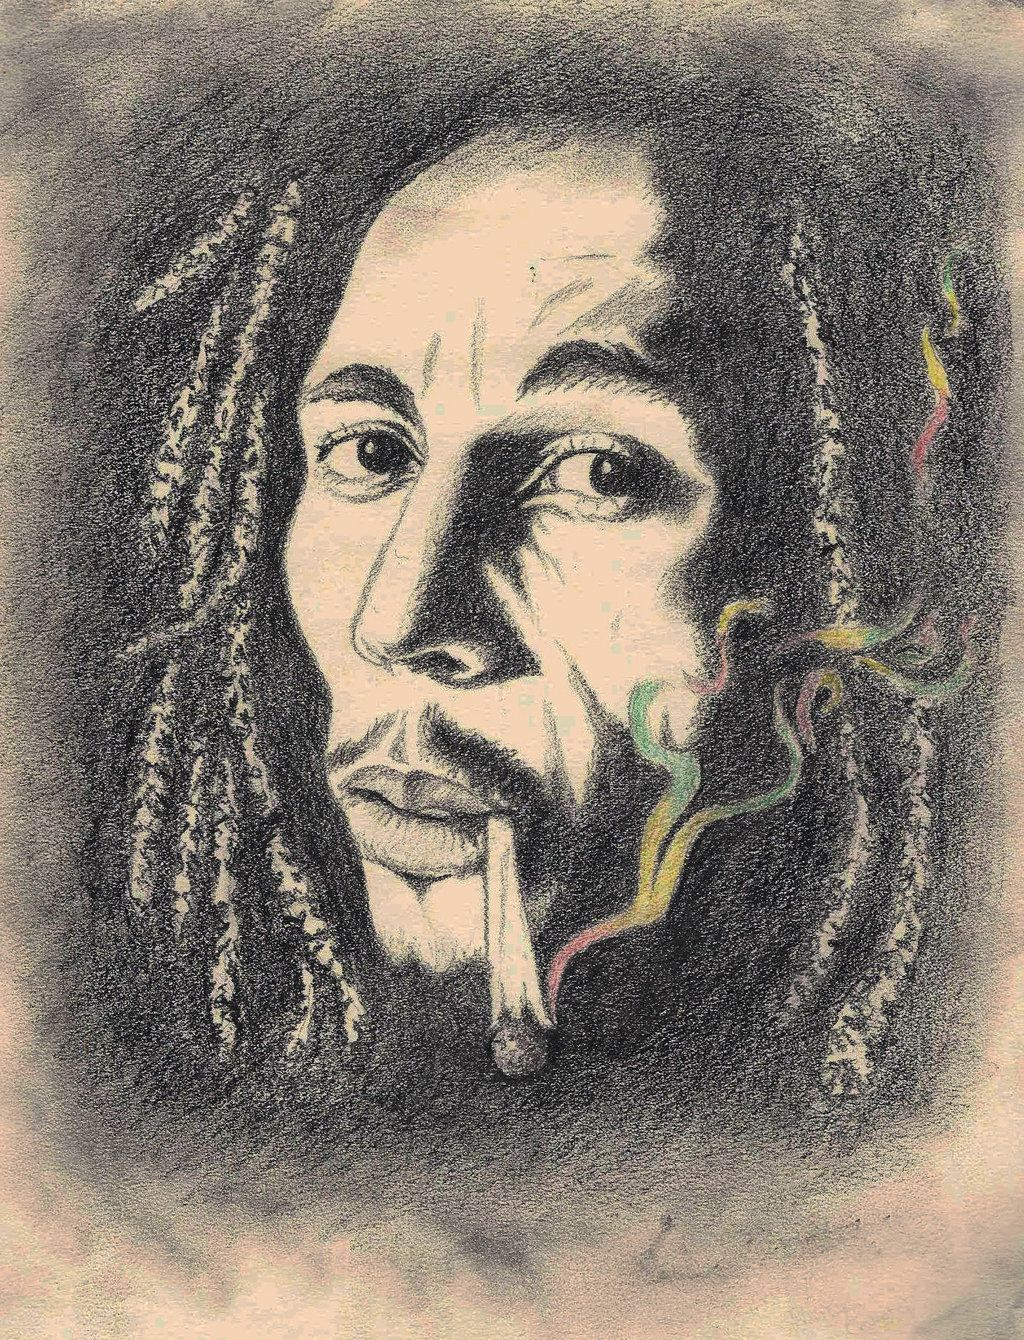 Bob Marley Sketch at PaintingValley.com | Explore collection of Bob ...